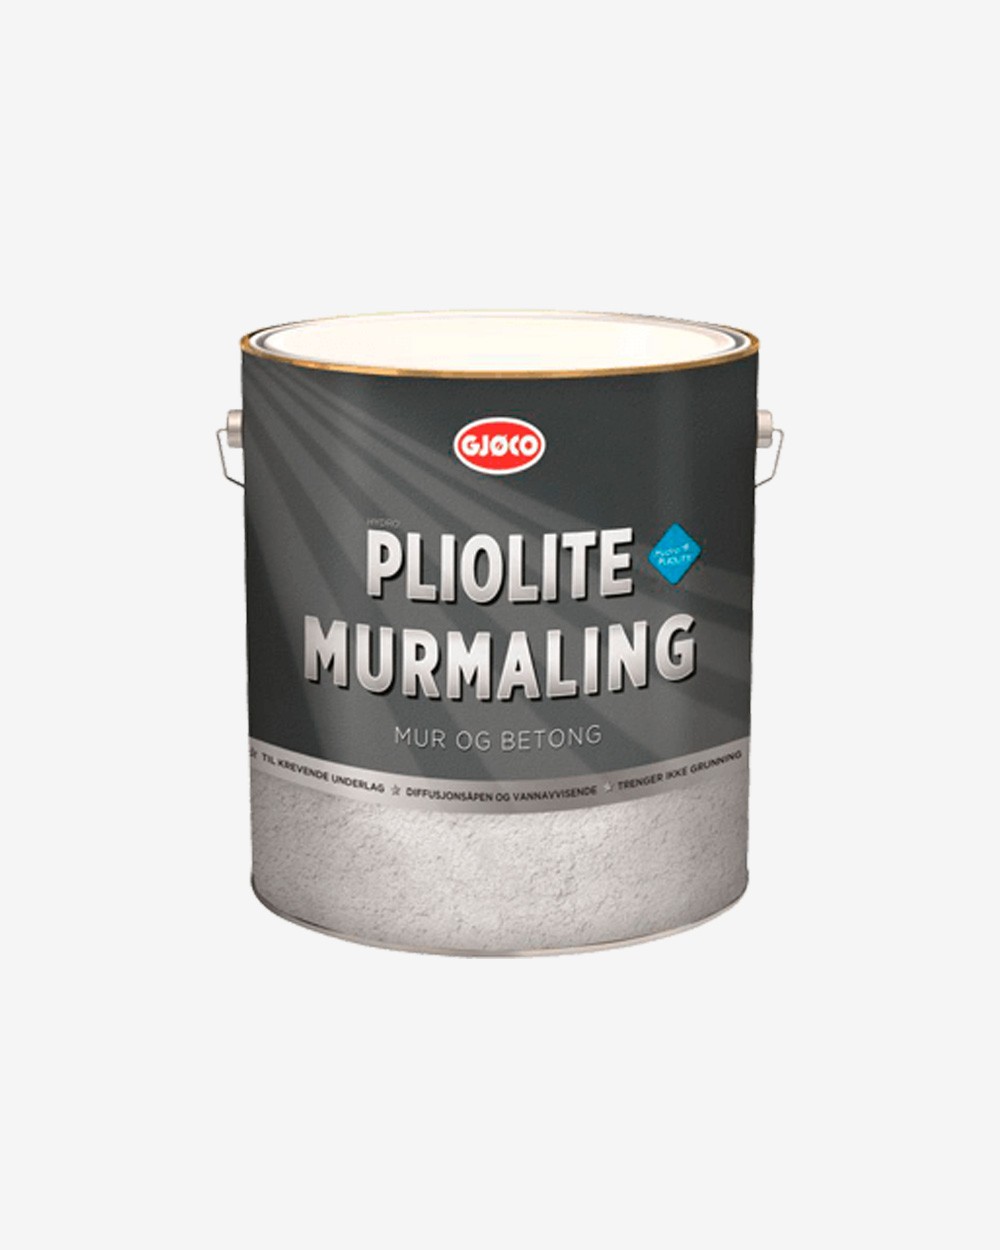 Se Gjøco Murmaling Pliolite, 9 liter hos Picment.dk